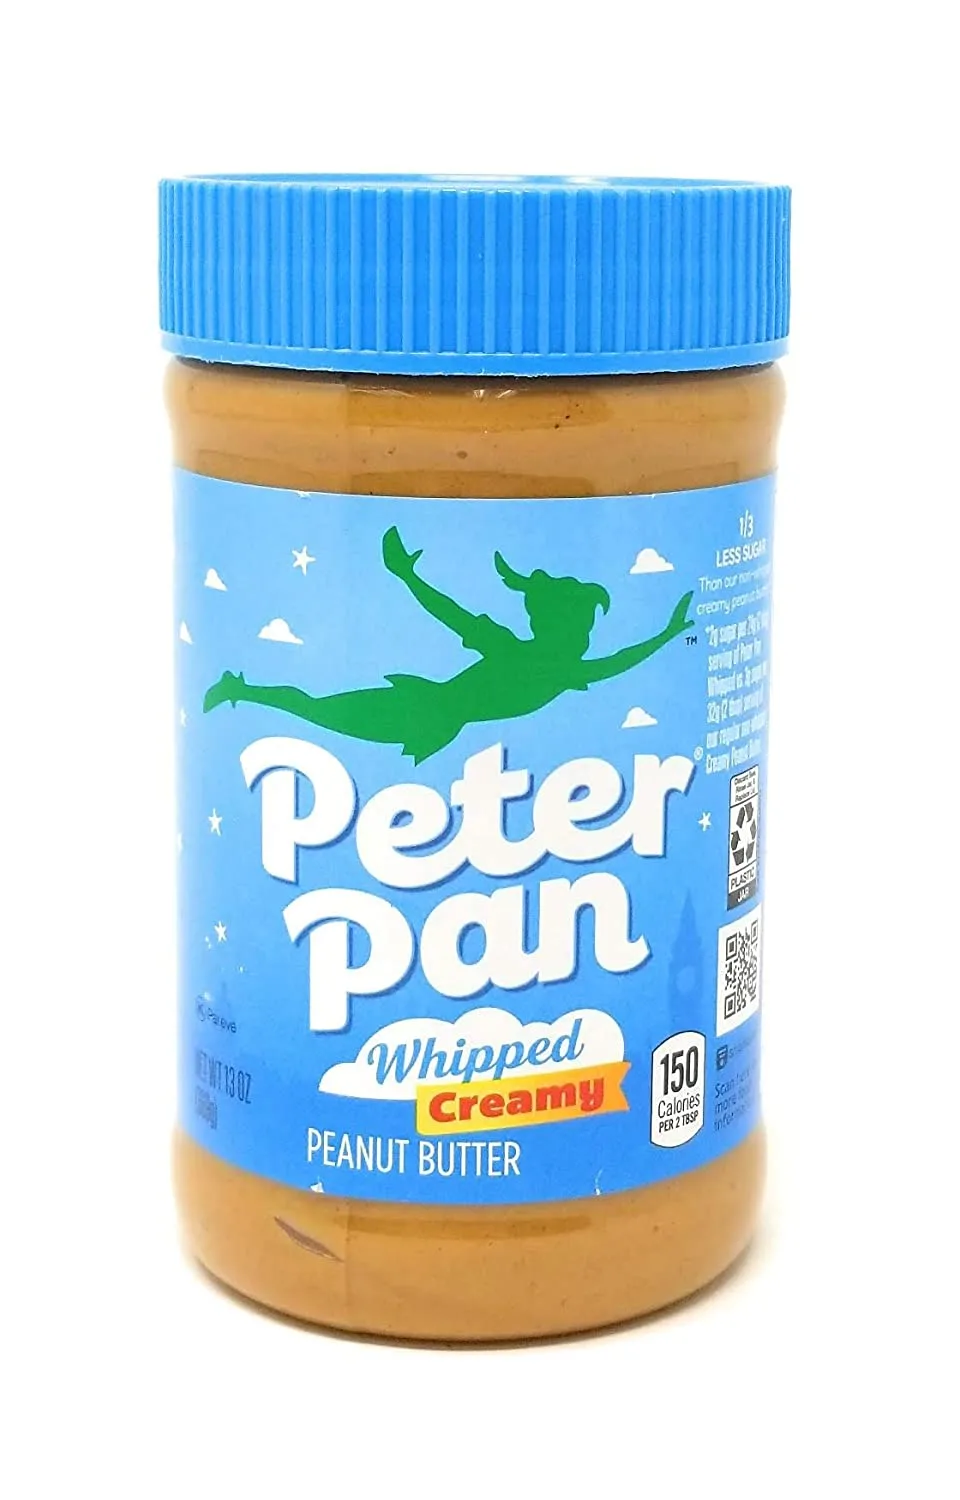 Peter Pan, Whipped Creamy, 1/3 less sugar
